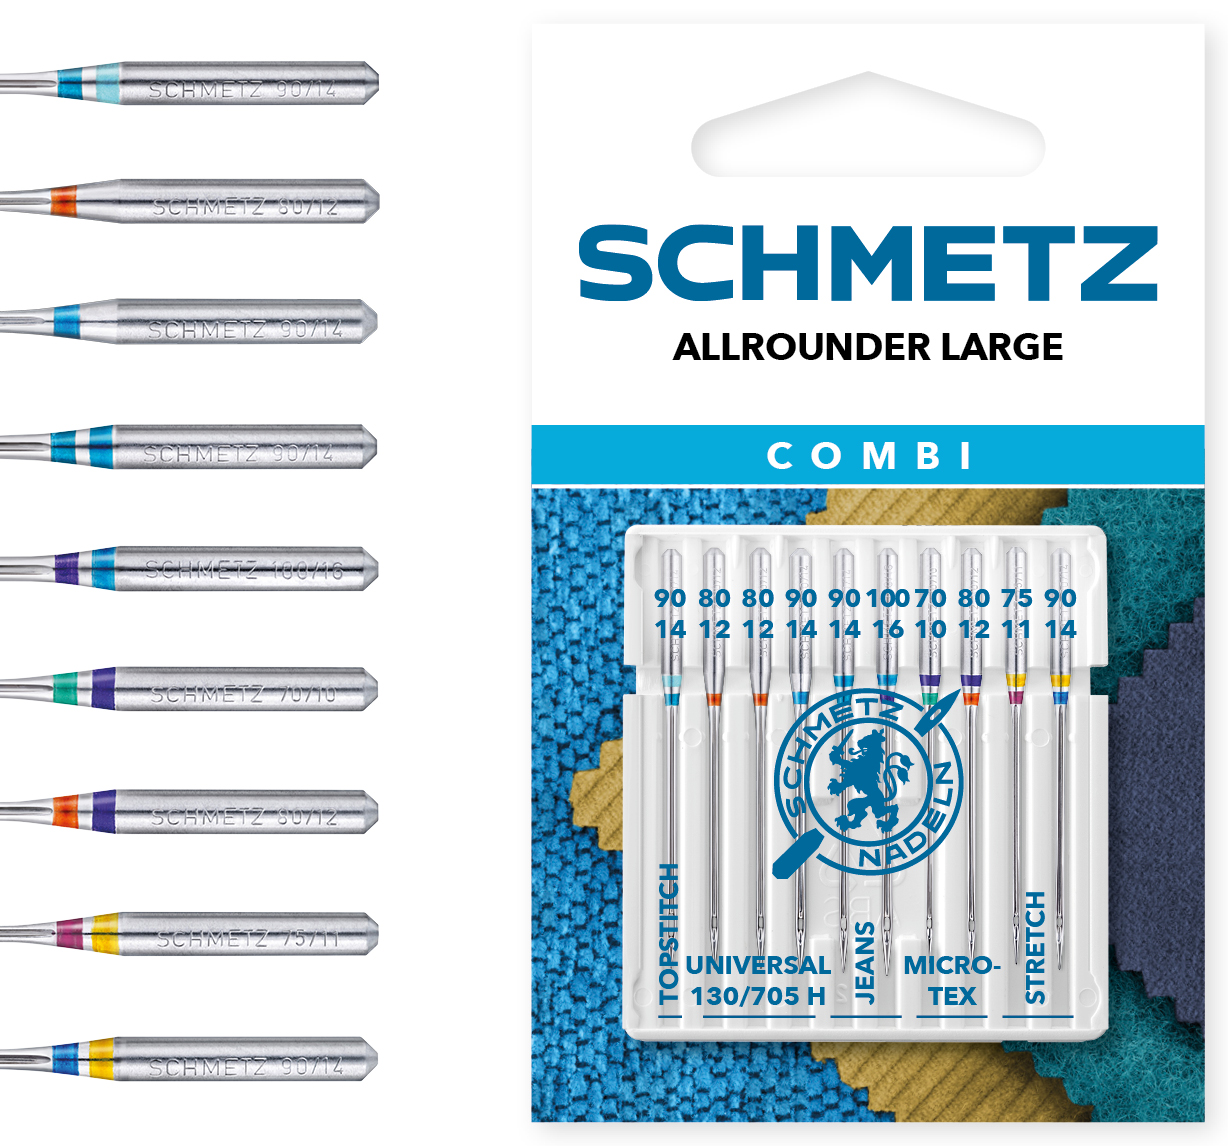 Schmetz Combi ALLROUNDER LARGE / Topstitch 70, Universal 2x80,1x90, Jeans 1x90,1x100, Microte